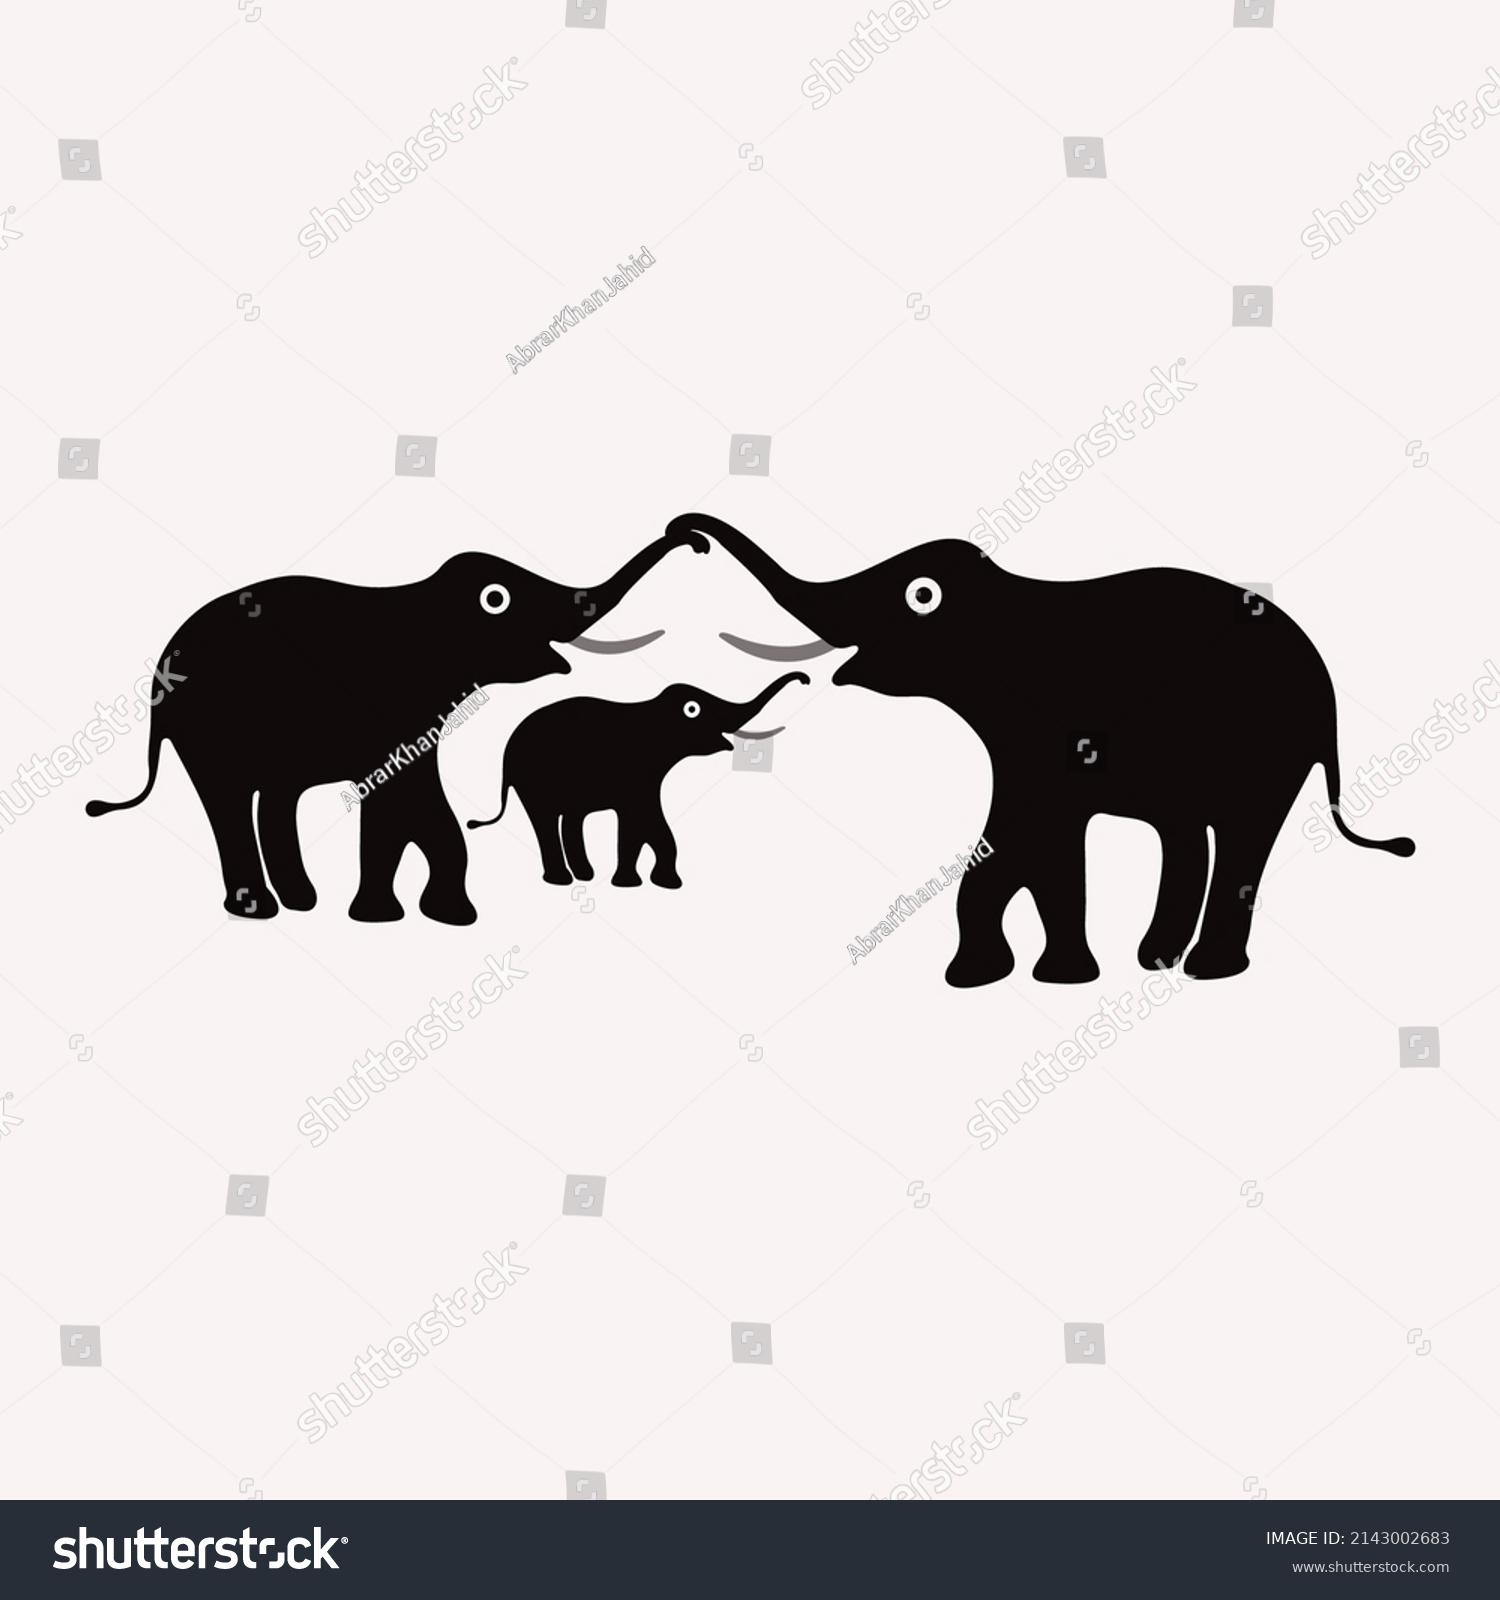 SVG of three black elephant  project logo  svg